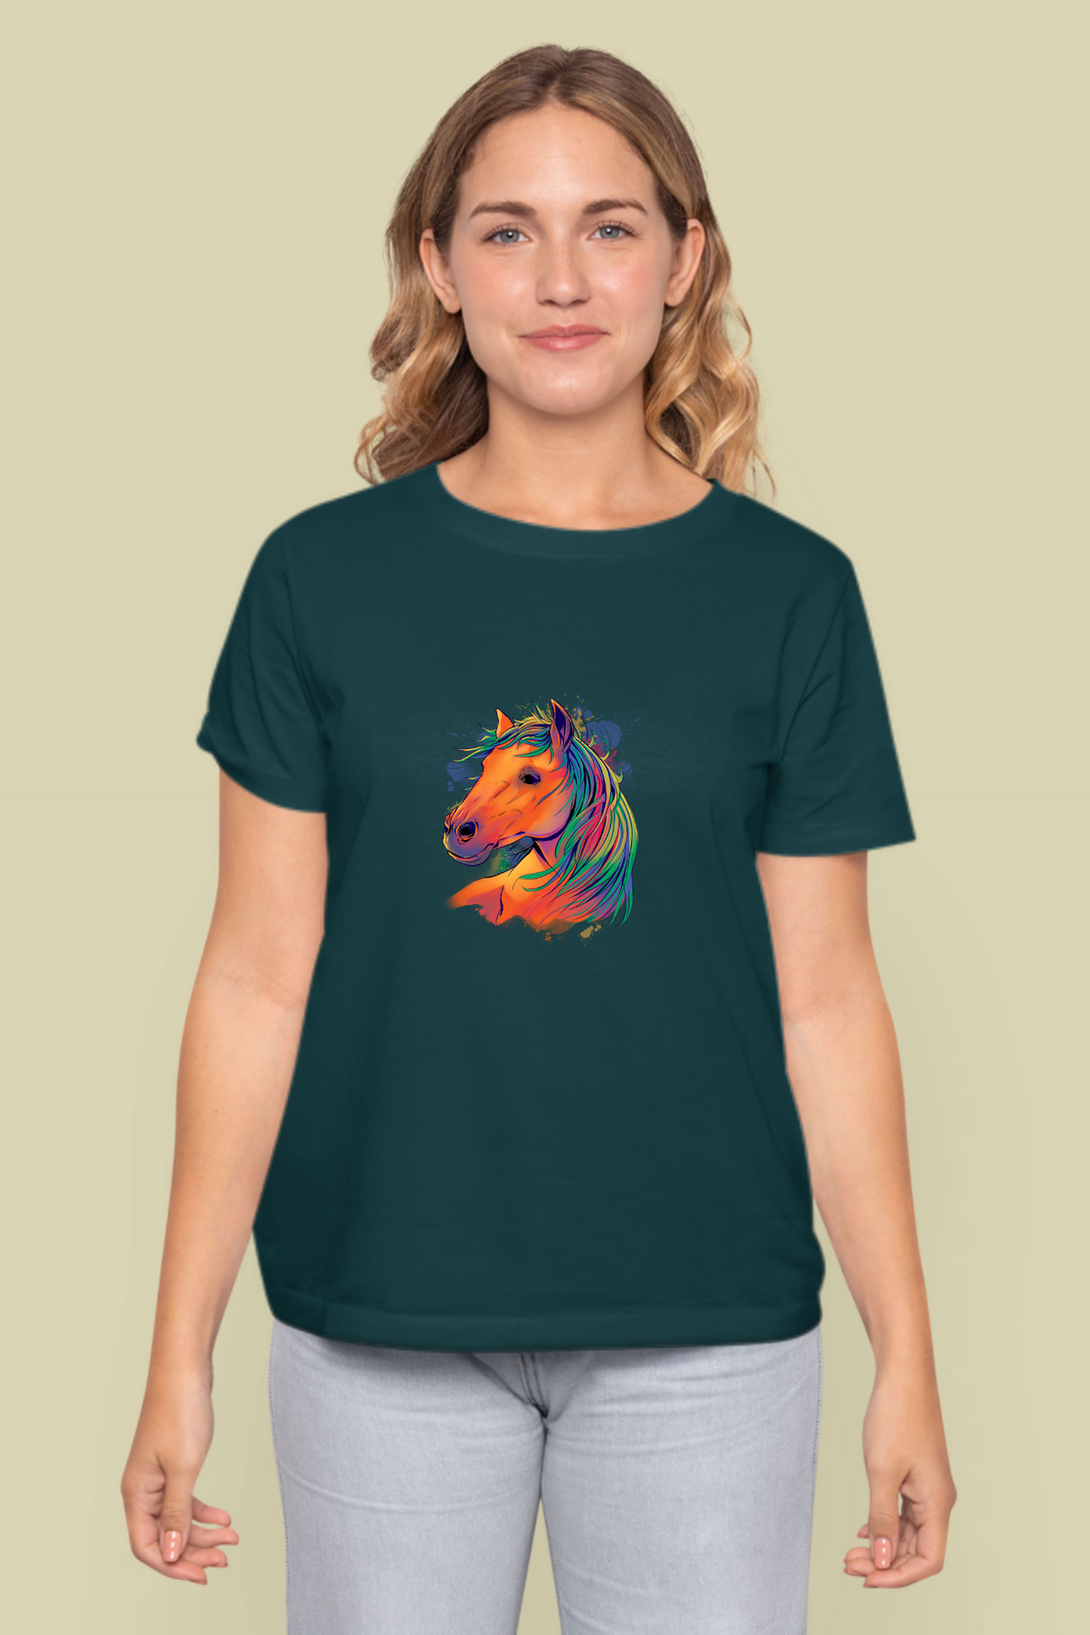 Horse Art Printed T-Shirt For Women - WowWaves - 10